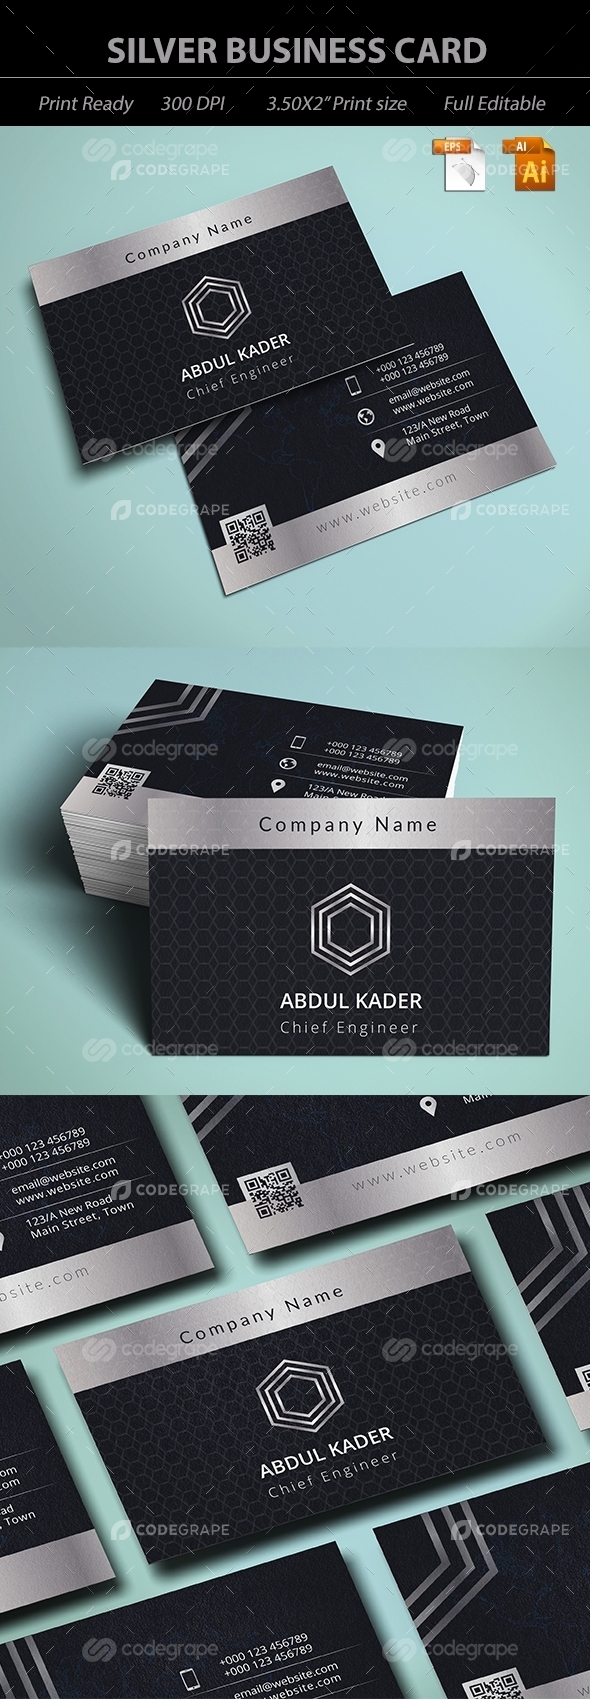 Silver Business Card Design